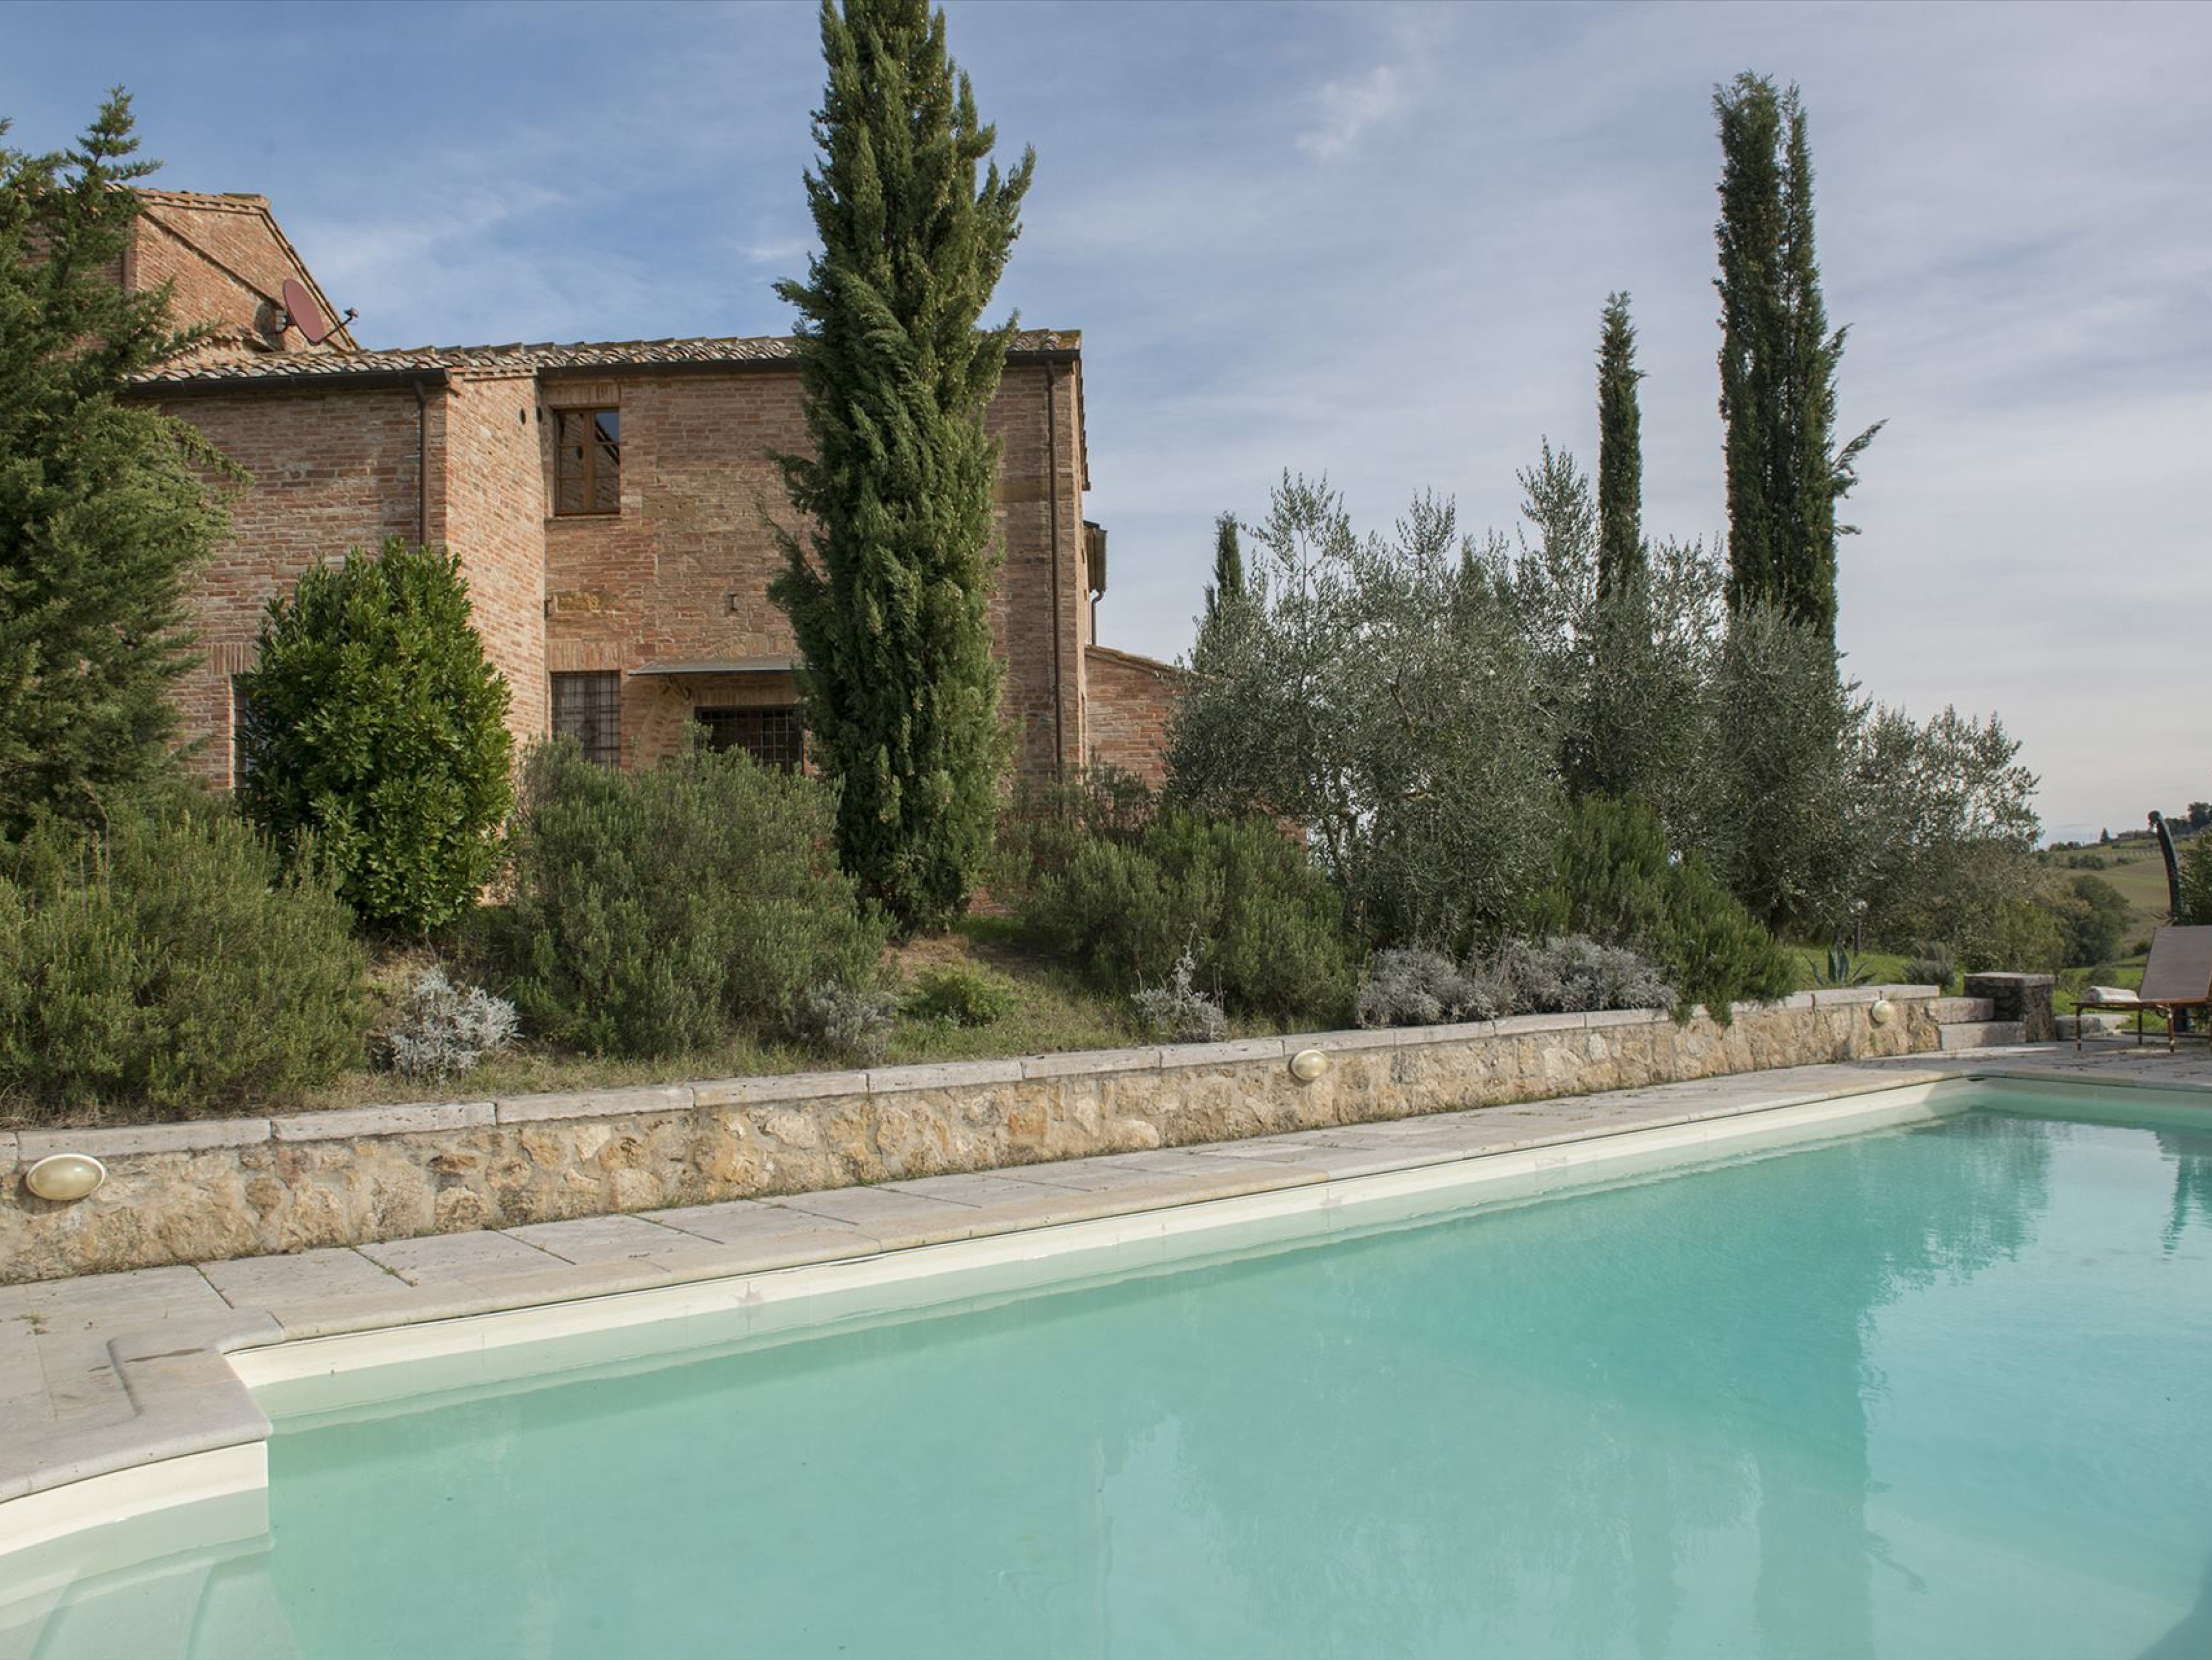 Casale Dei Siena vacation rentals for the Palio